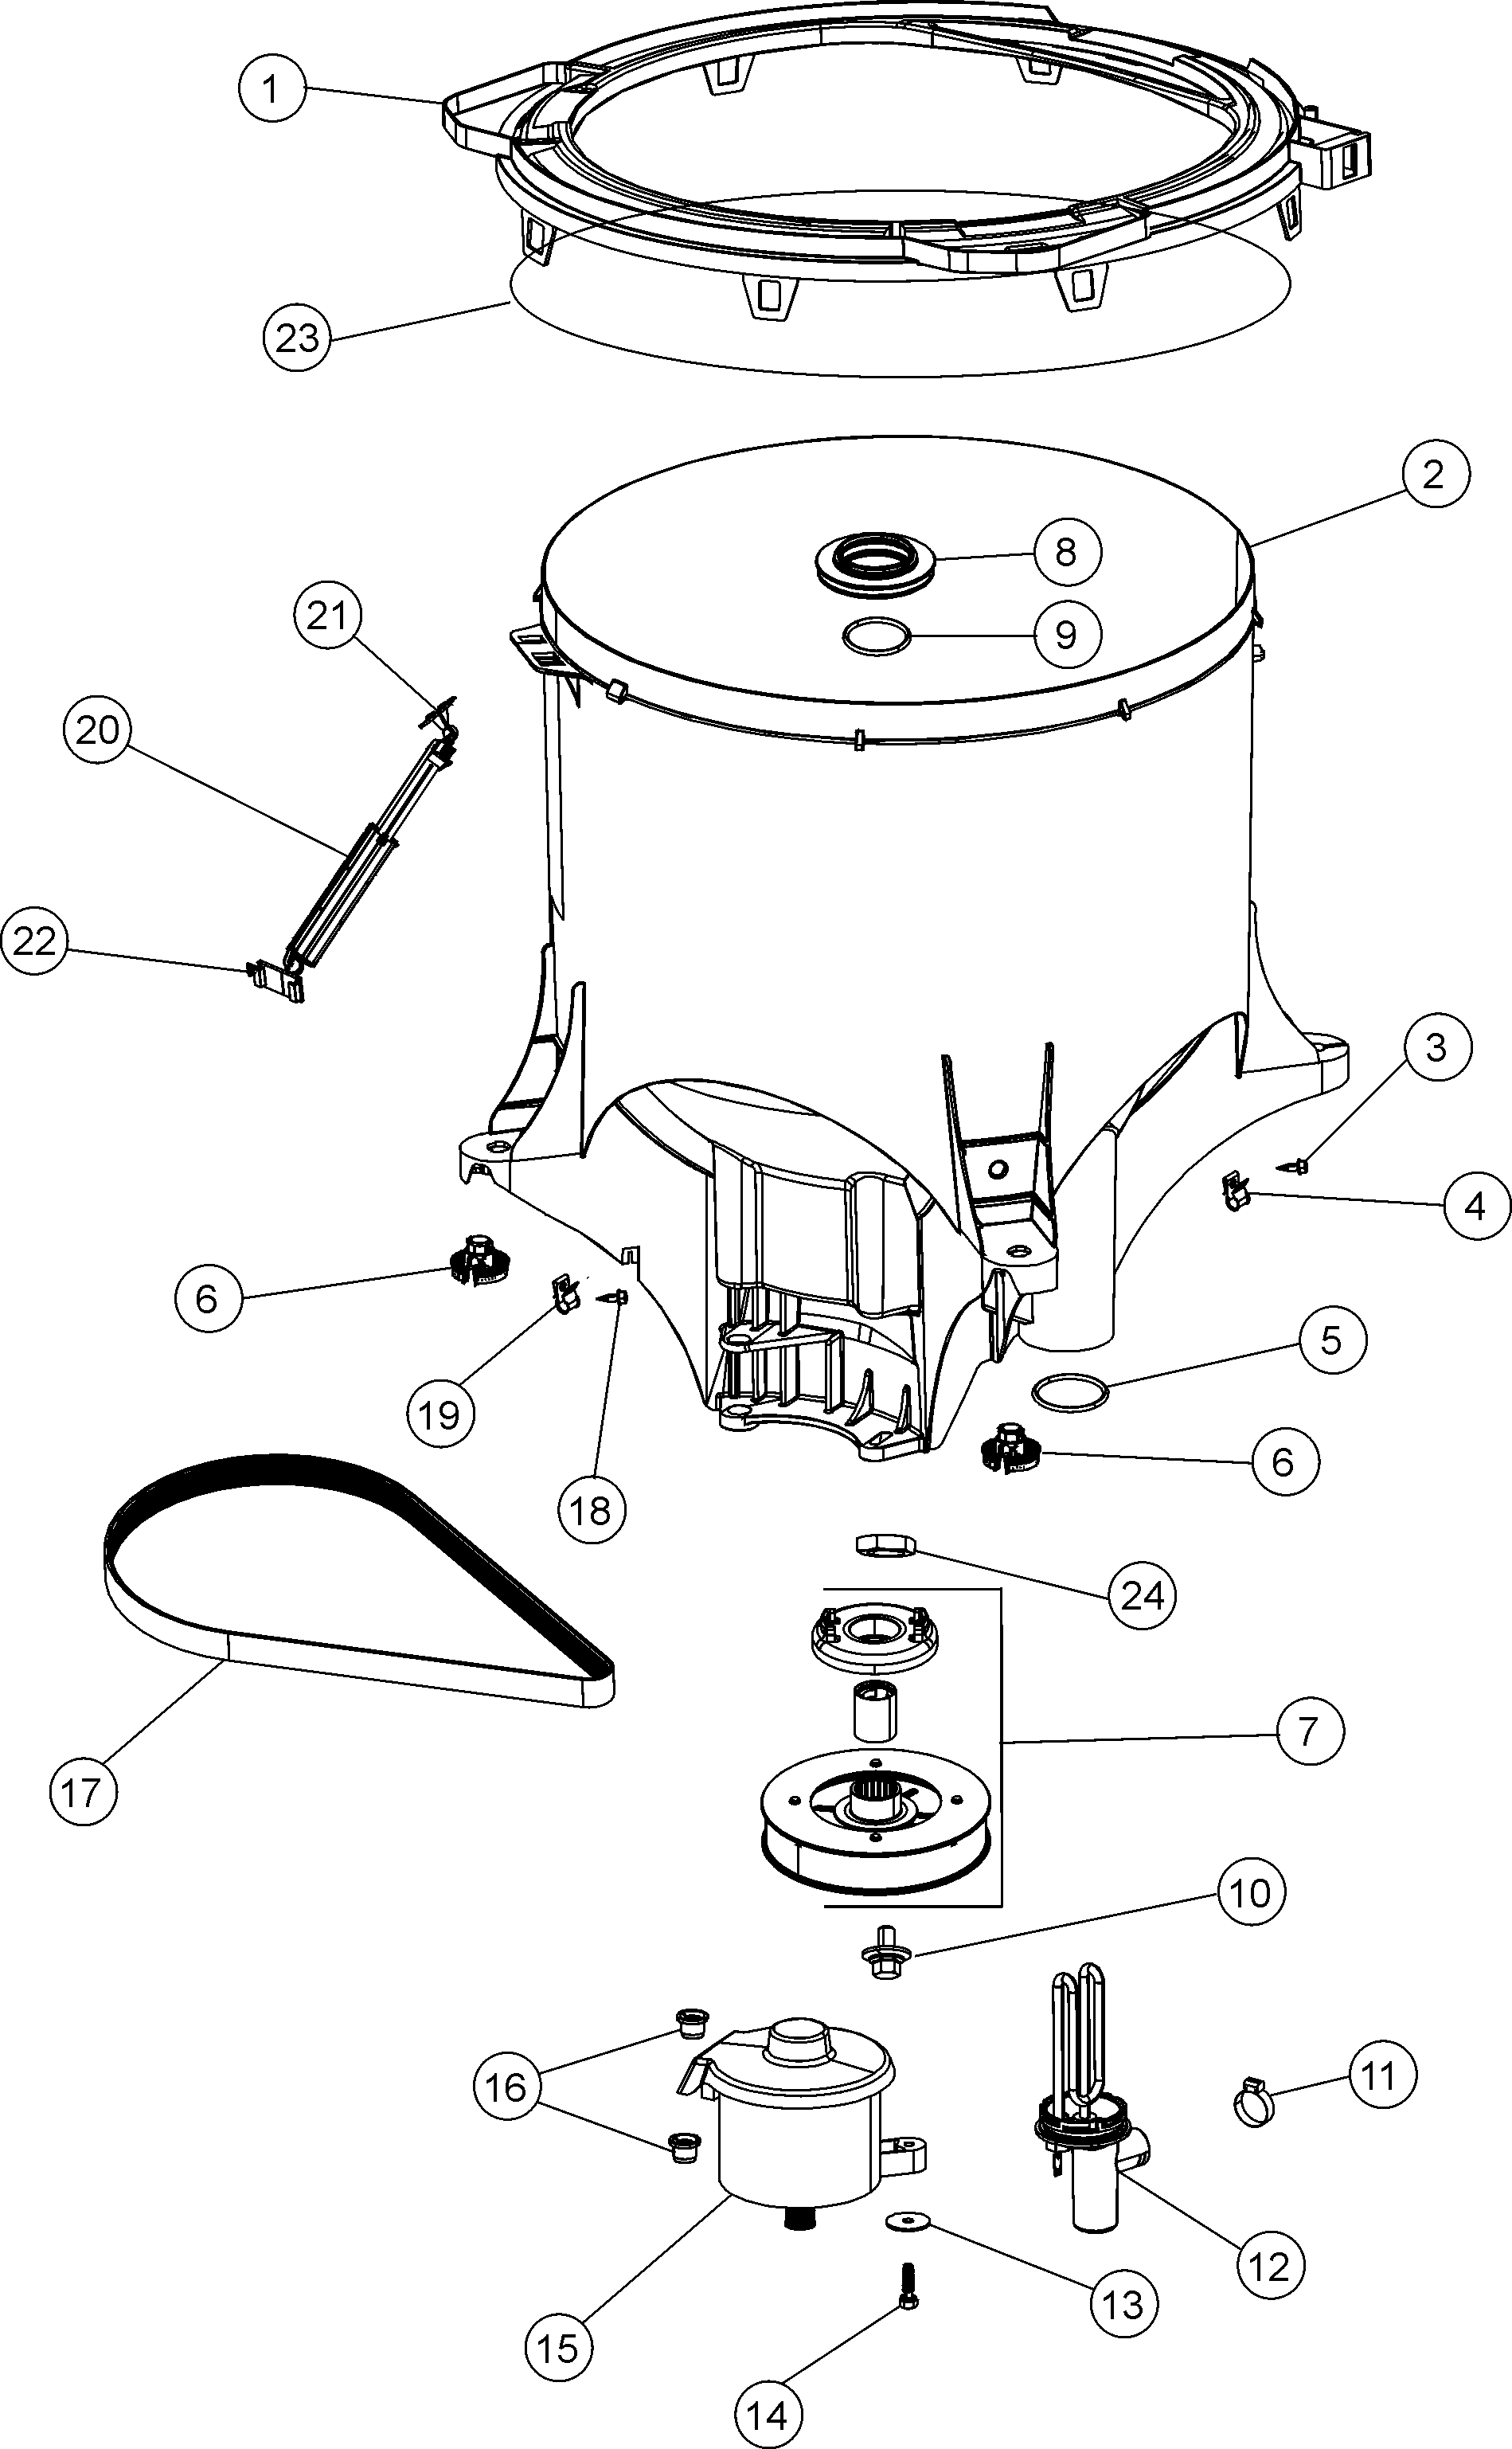 Maytag Neptune Dryer Wiring Diagram